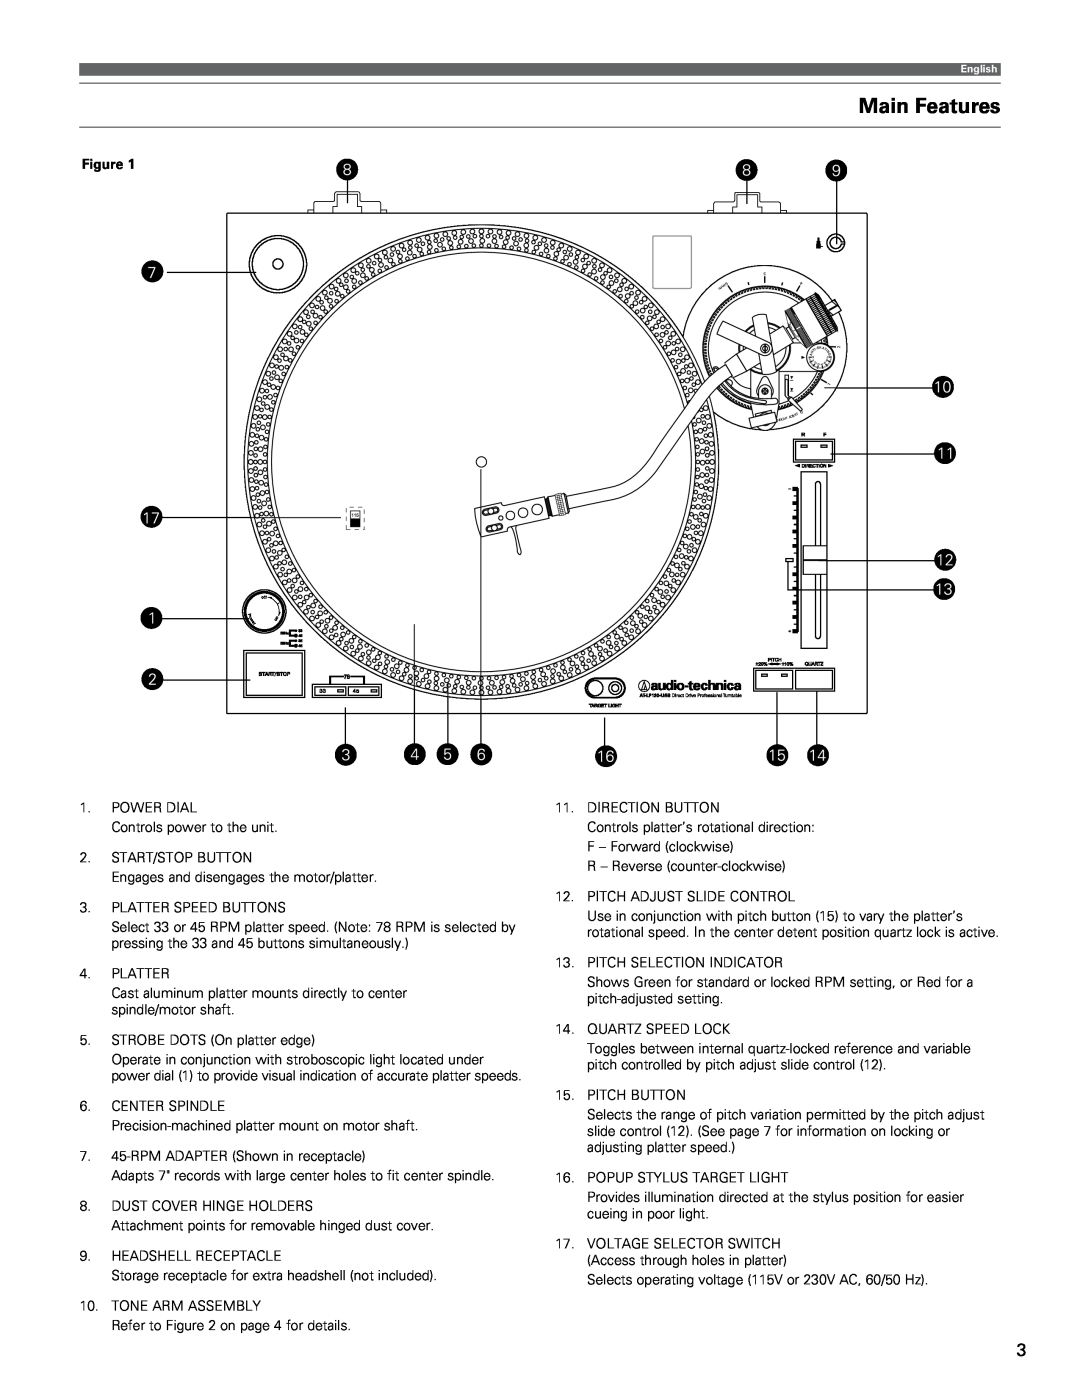 Audio-Technica AT-LP120-USB manual Main Features 